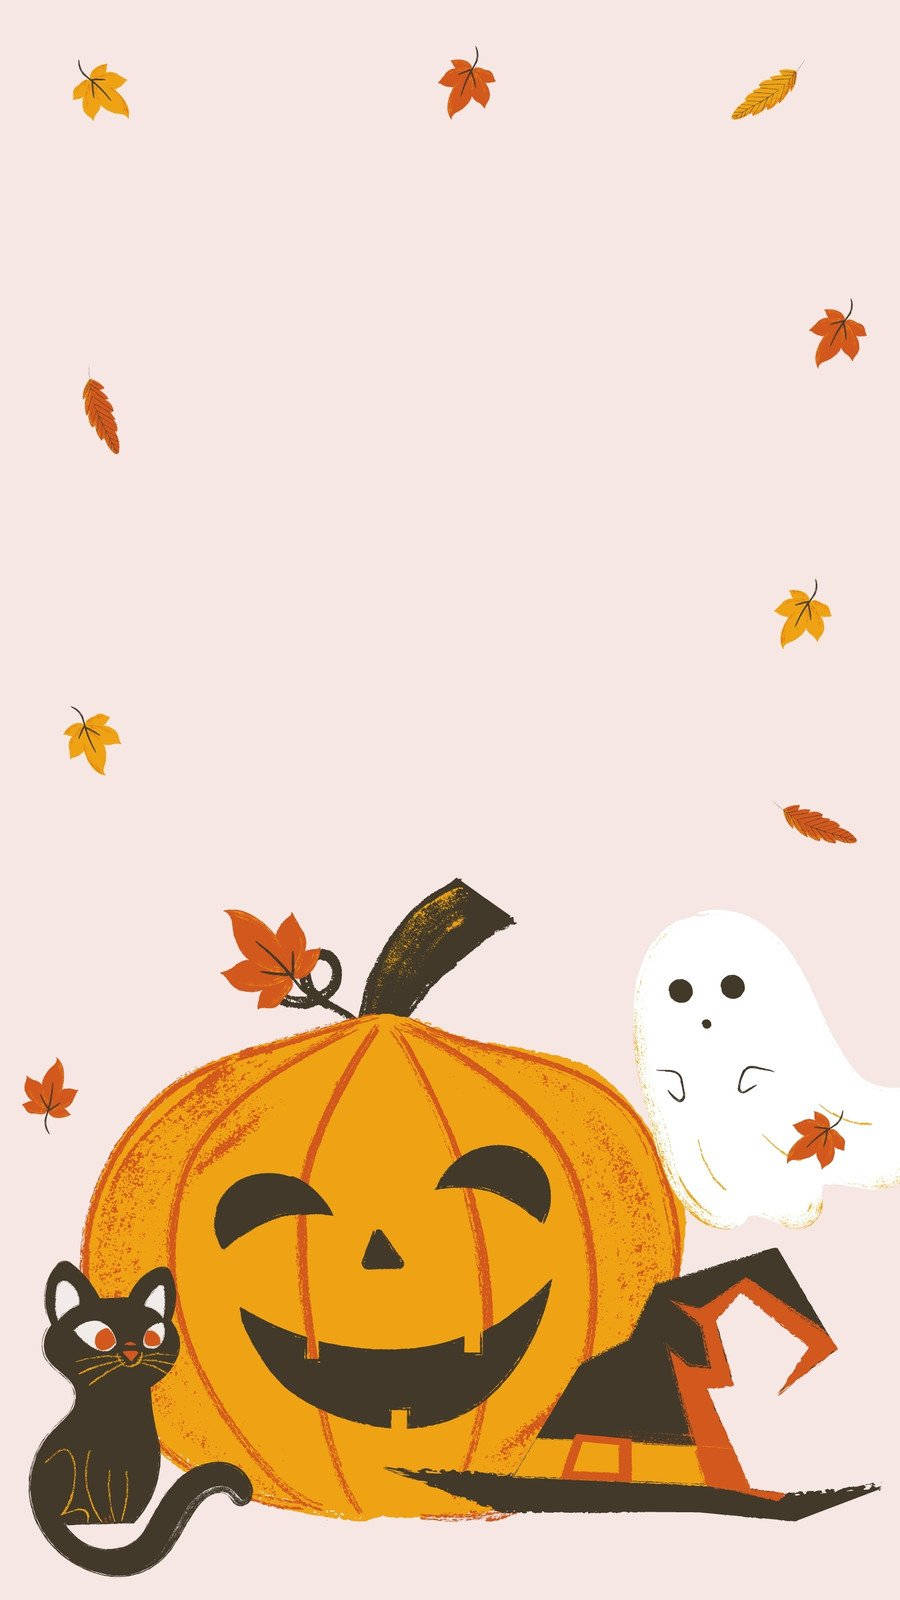 cool halloween background